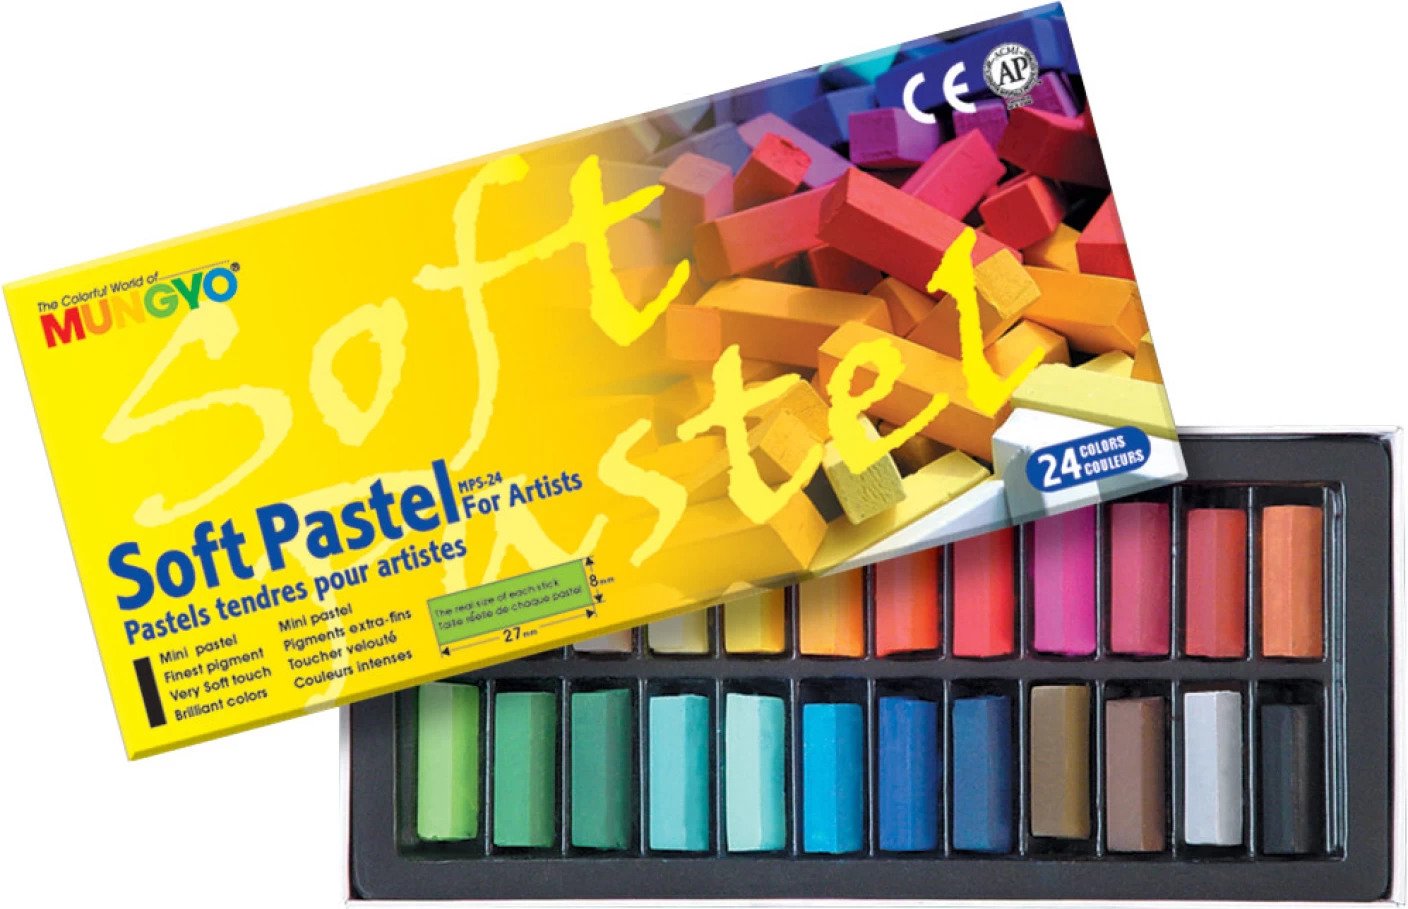 Mungyo Pastel 24 colors - LUTS DOLL